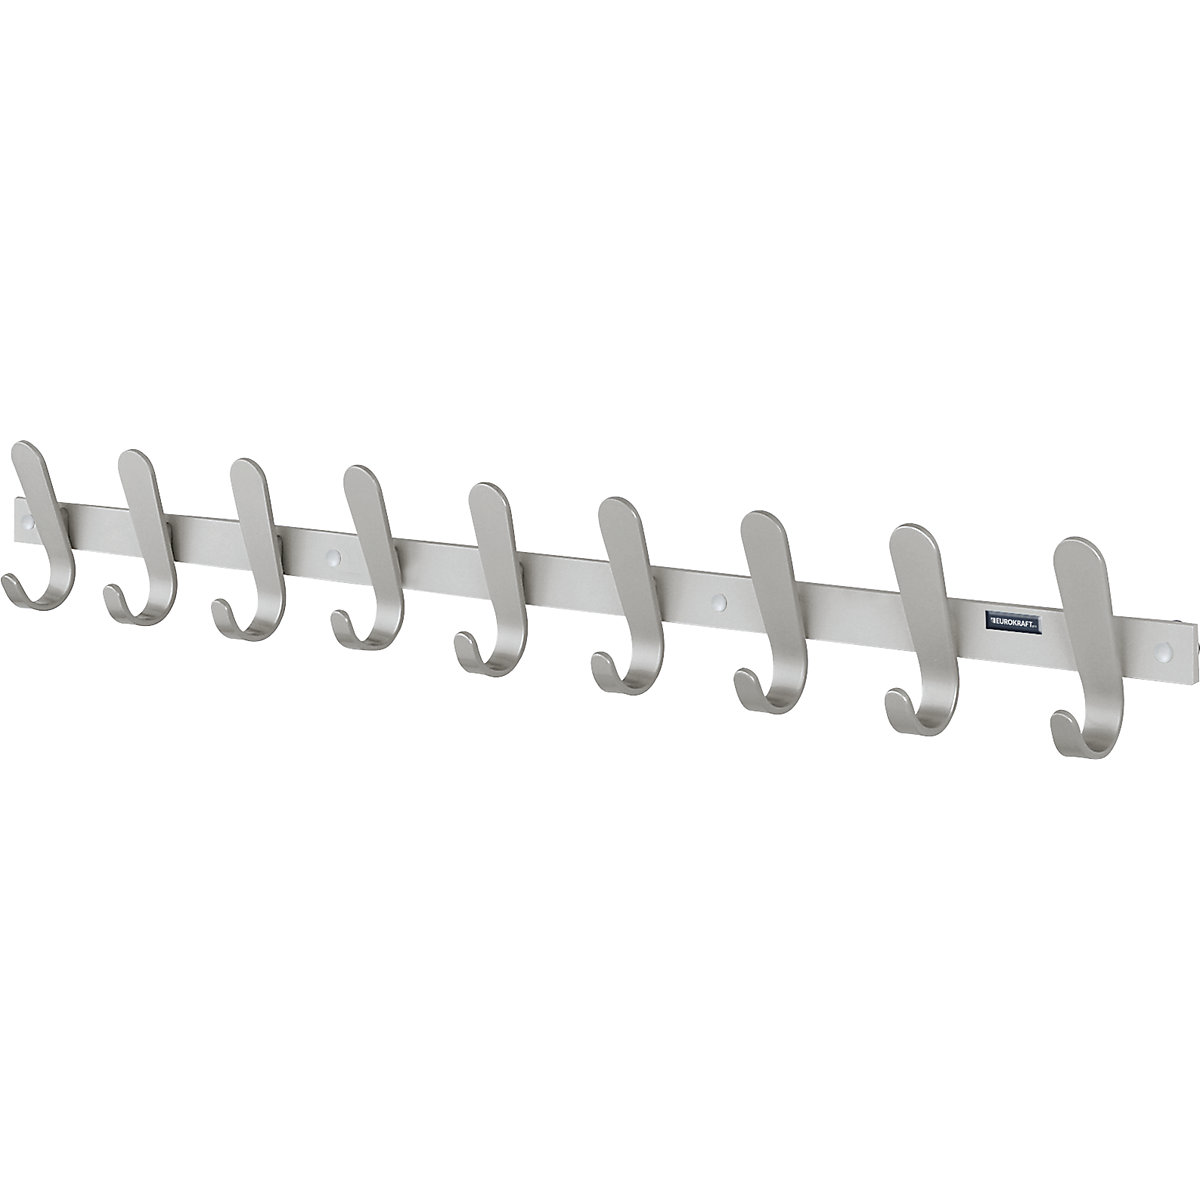 Coat rail – eurokraft pro, 9 coat hooks, HxWxD 130 x 1080 x 60 mm, pack of 1, hook colour silver-4